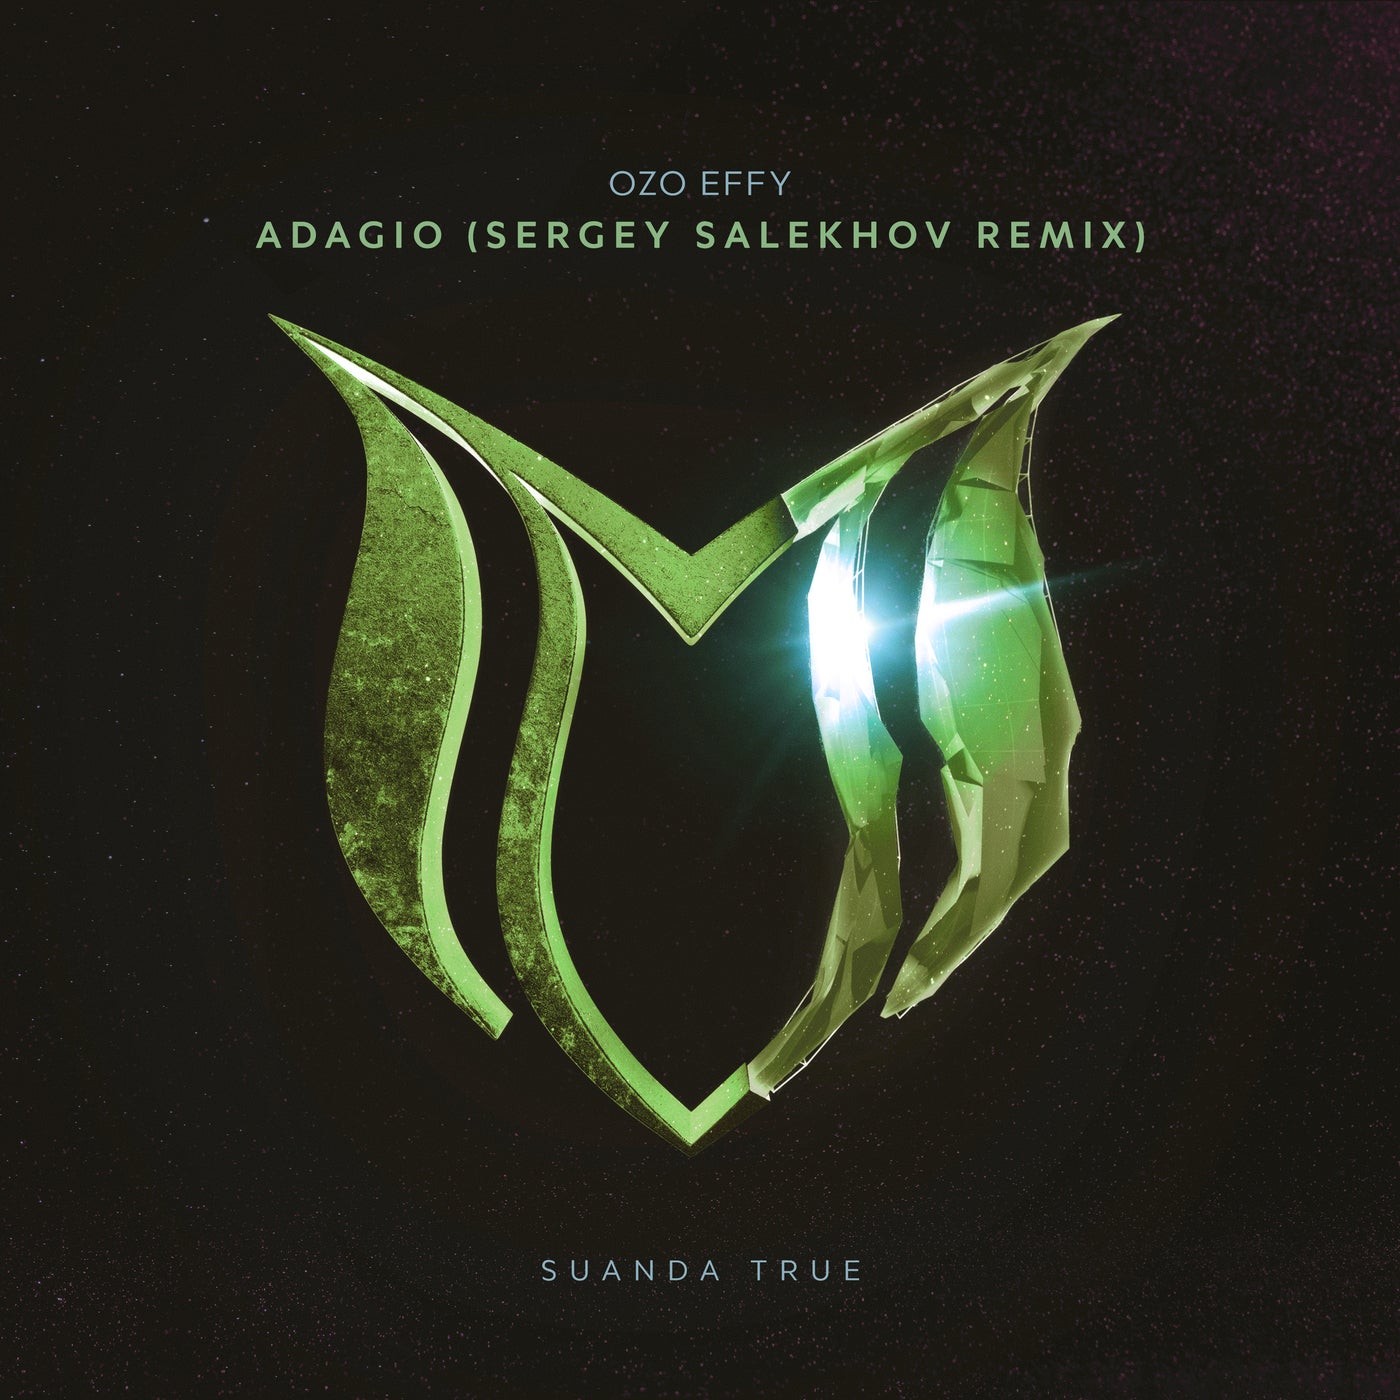 Adagio (Sergey Salekhov Remix)